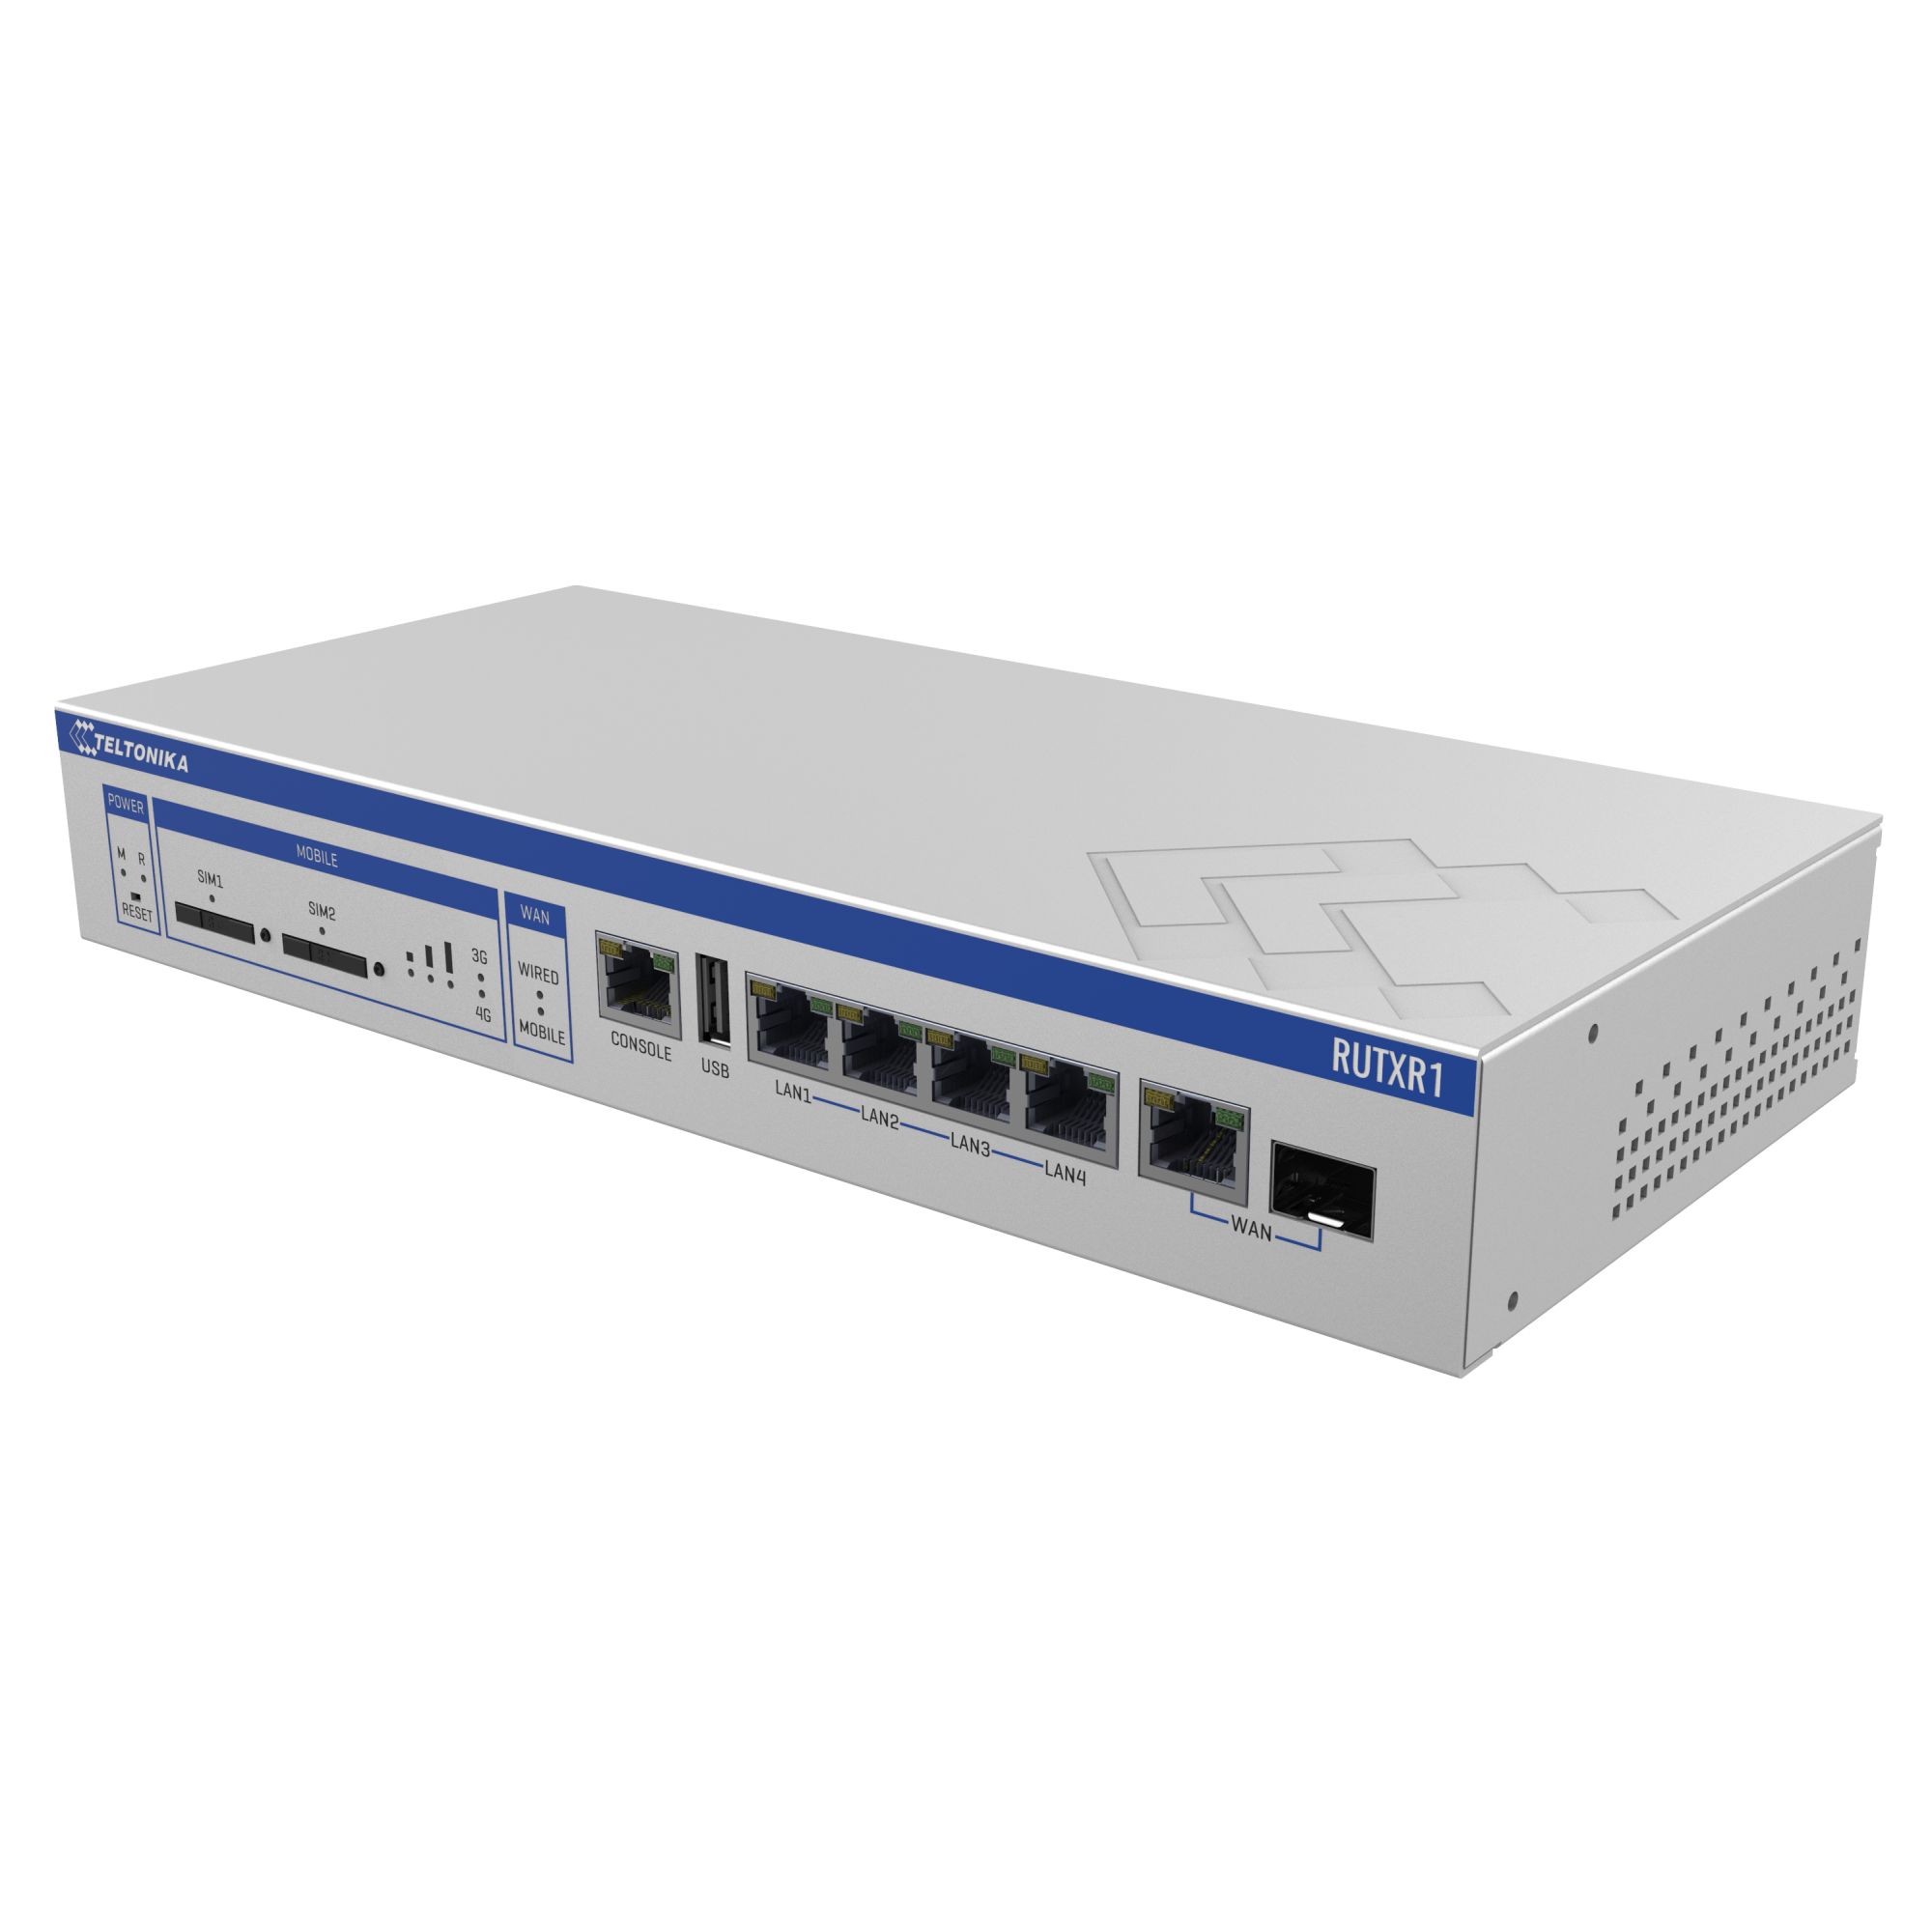 Teltonika RUTXR1 Enterprise SFP/LTE Router